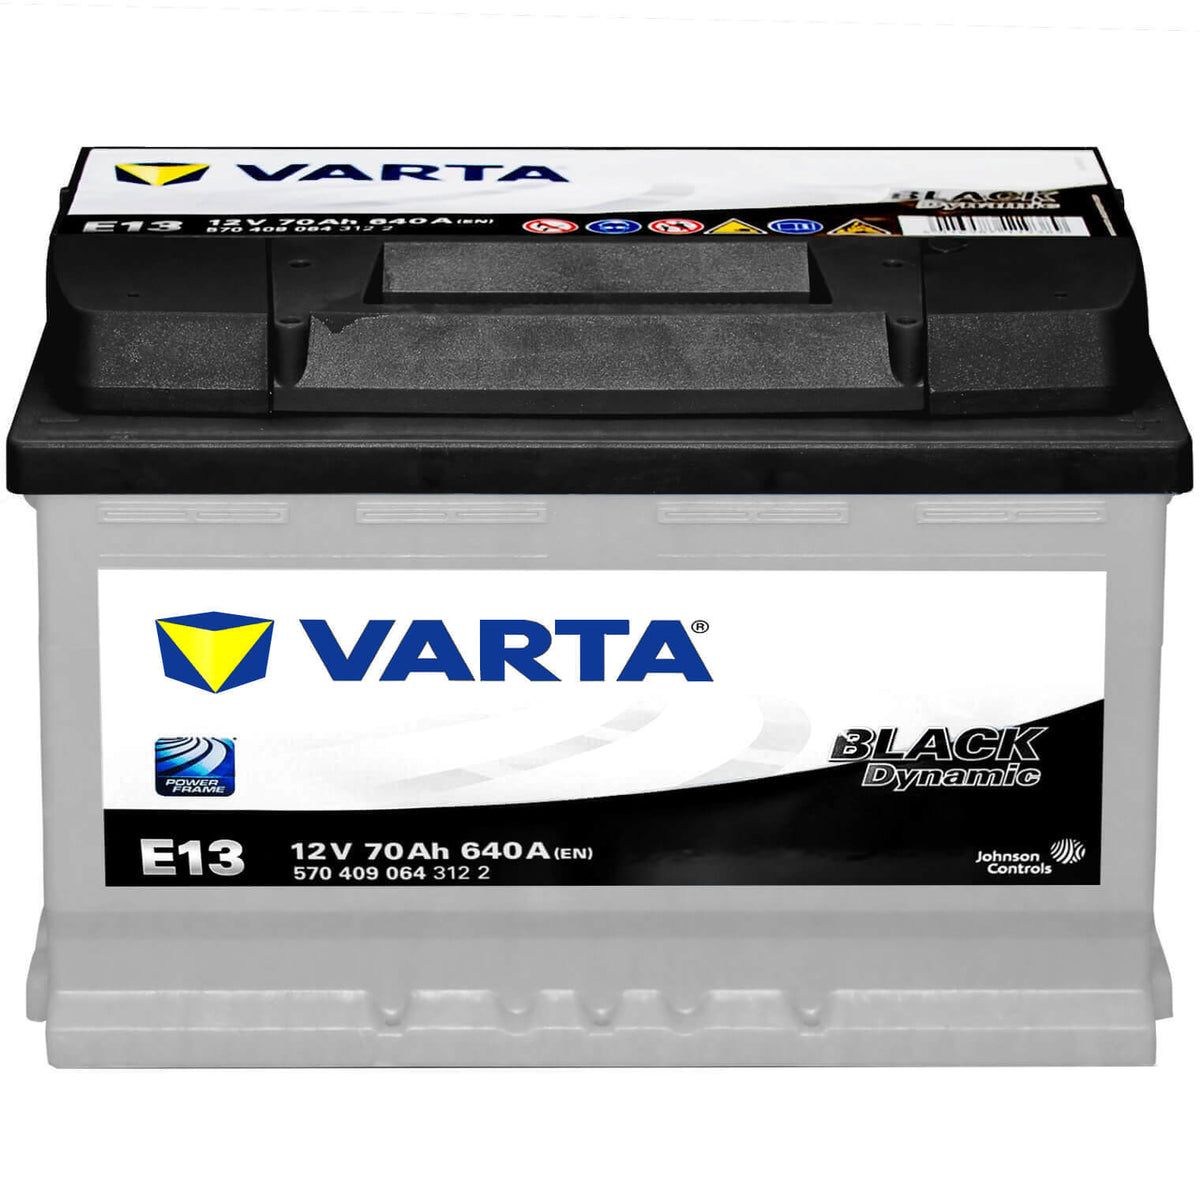 Varta E13 Black Dynamic 12V 70Ah Autobatterie 570 409 064